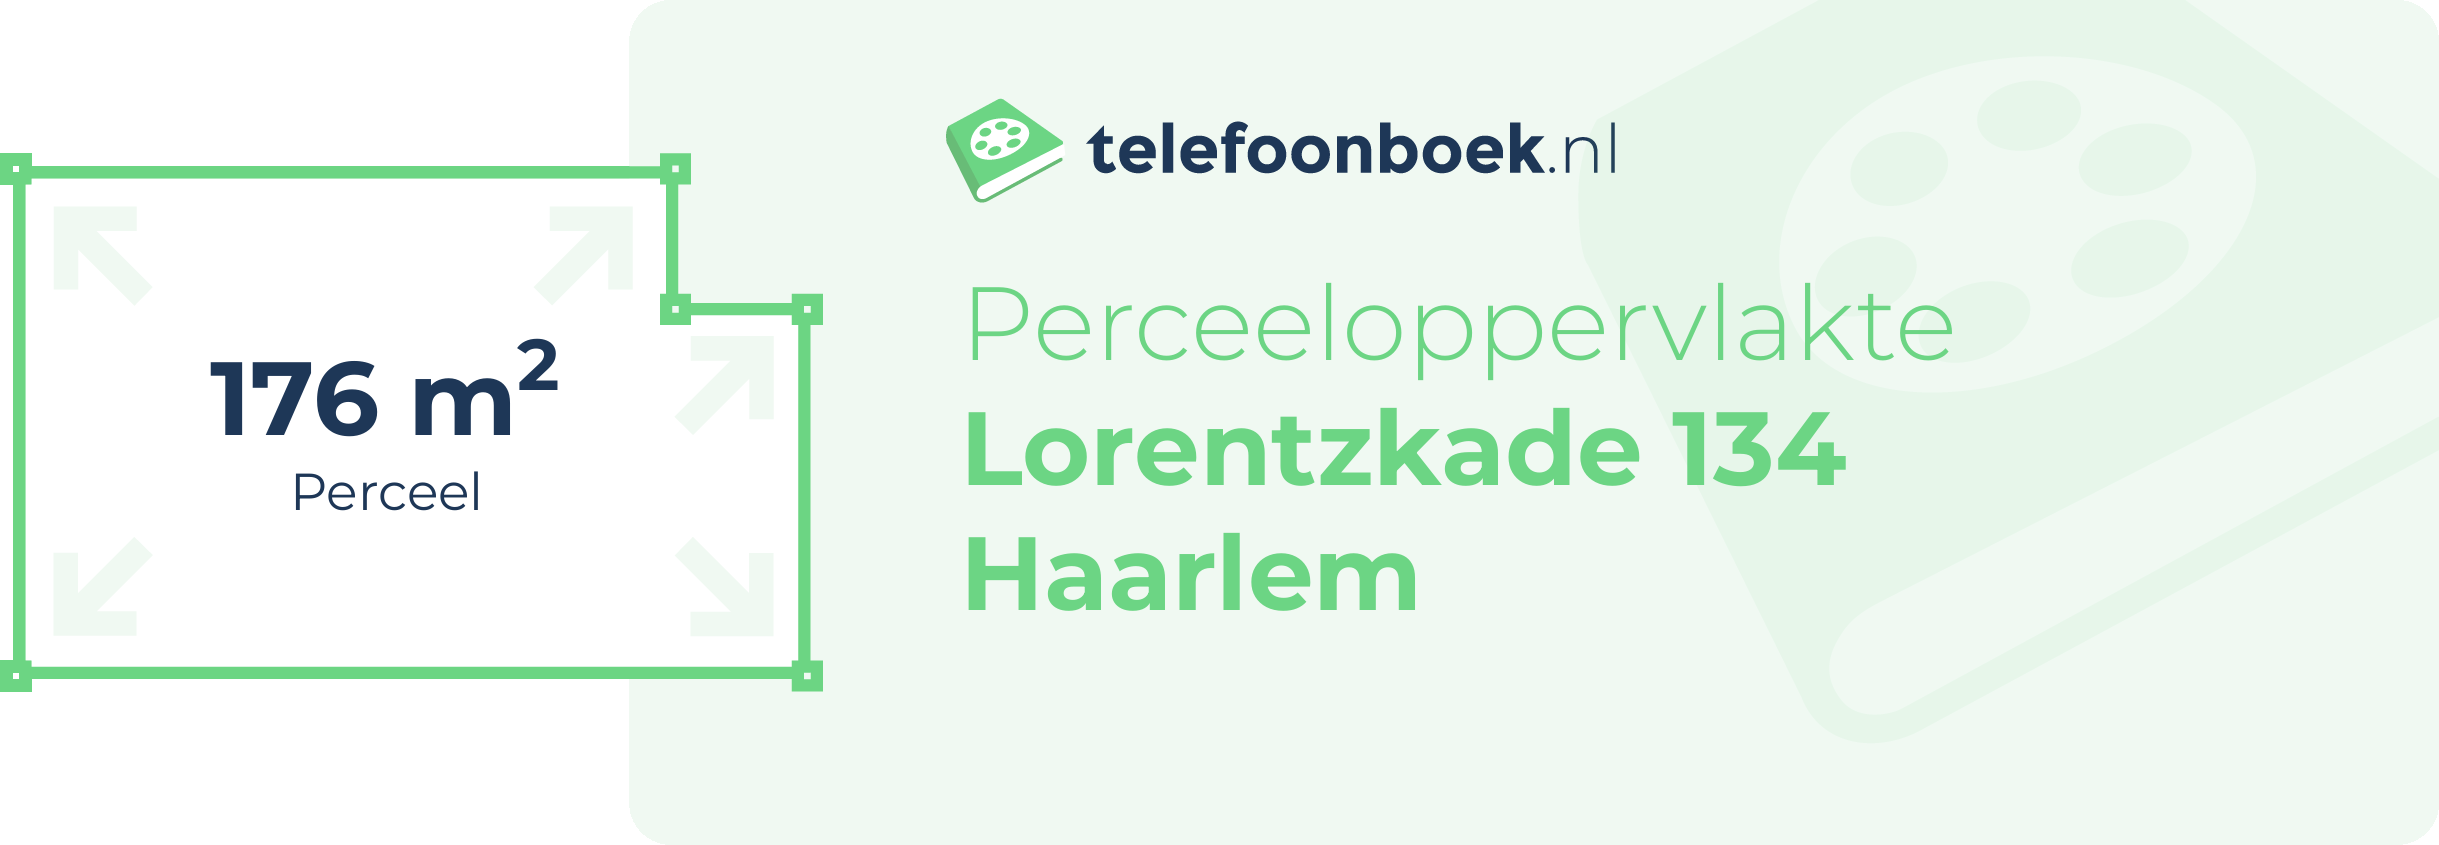 Perceeloppervlakte Lorentzkade 134 Haarlem